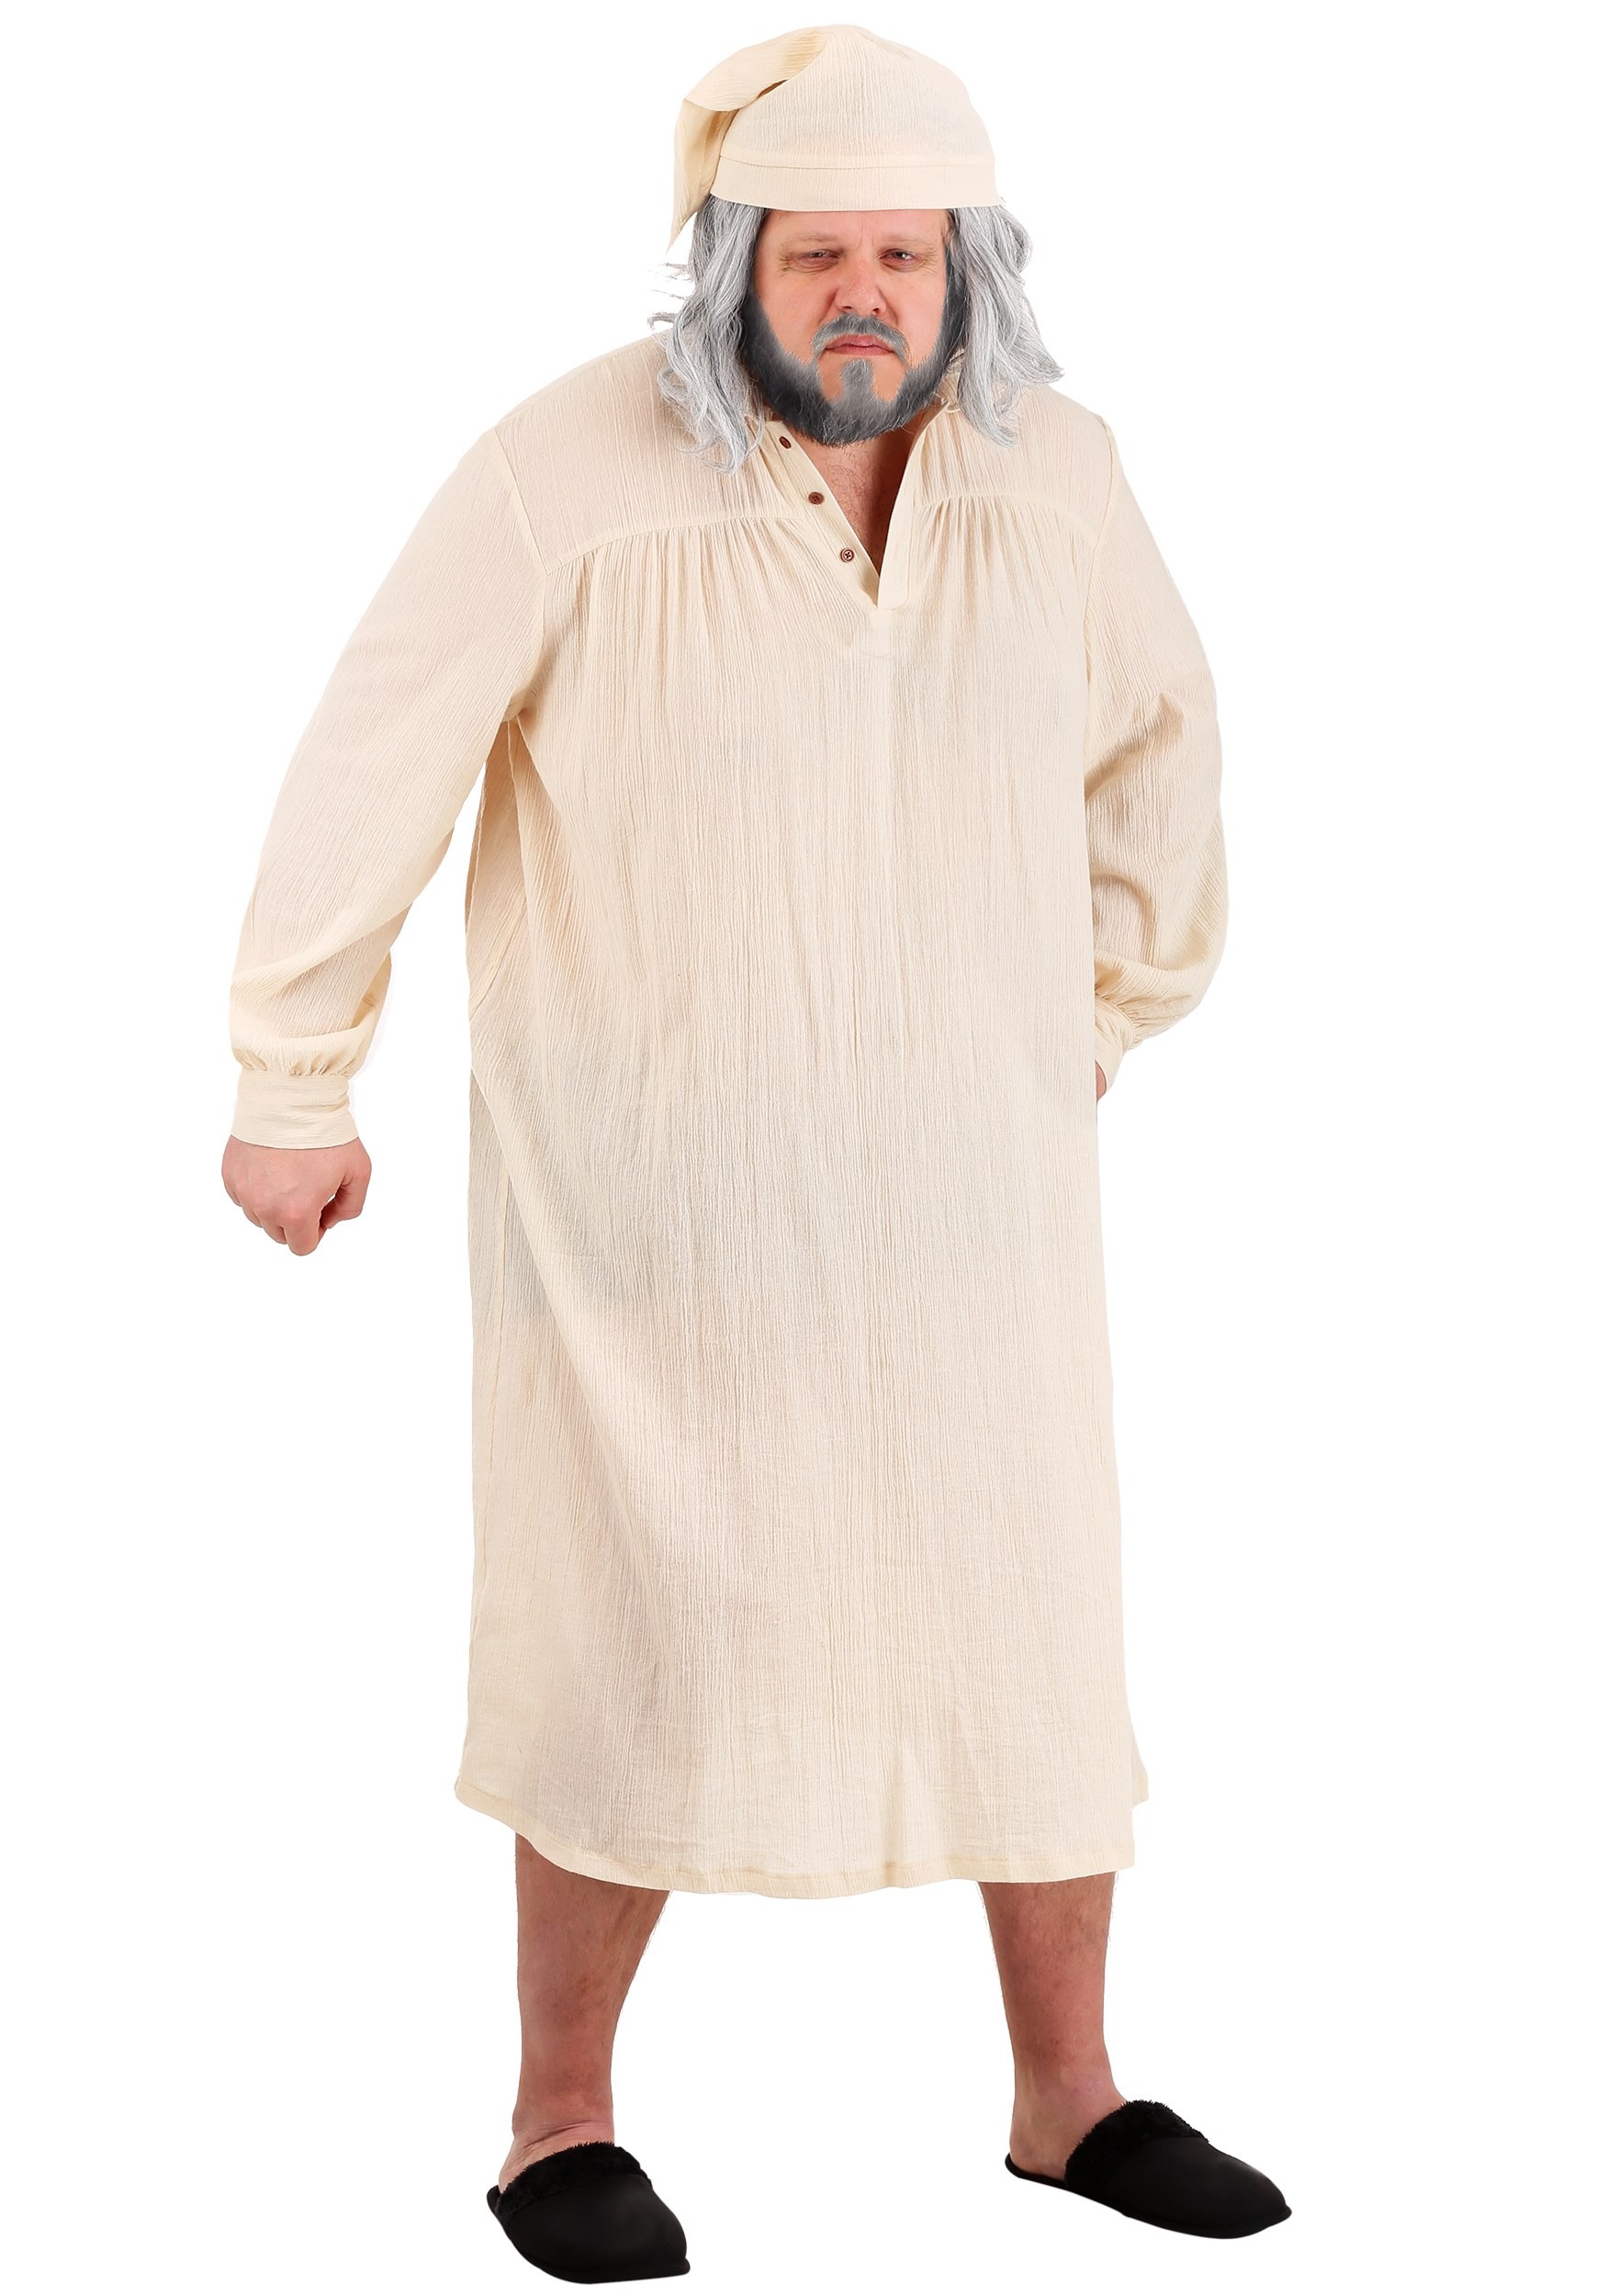 Humbug Nightgown Plus Size Mens Costume